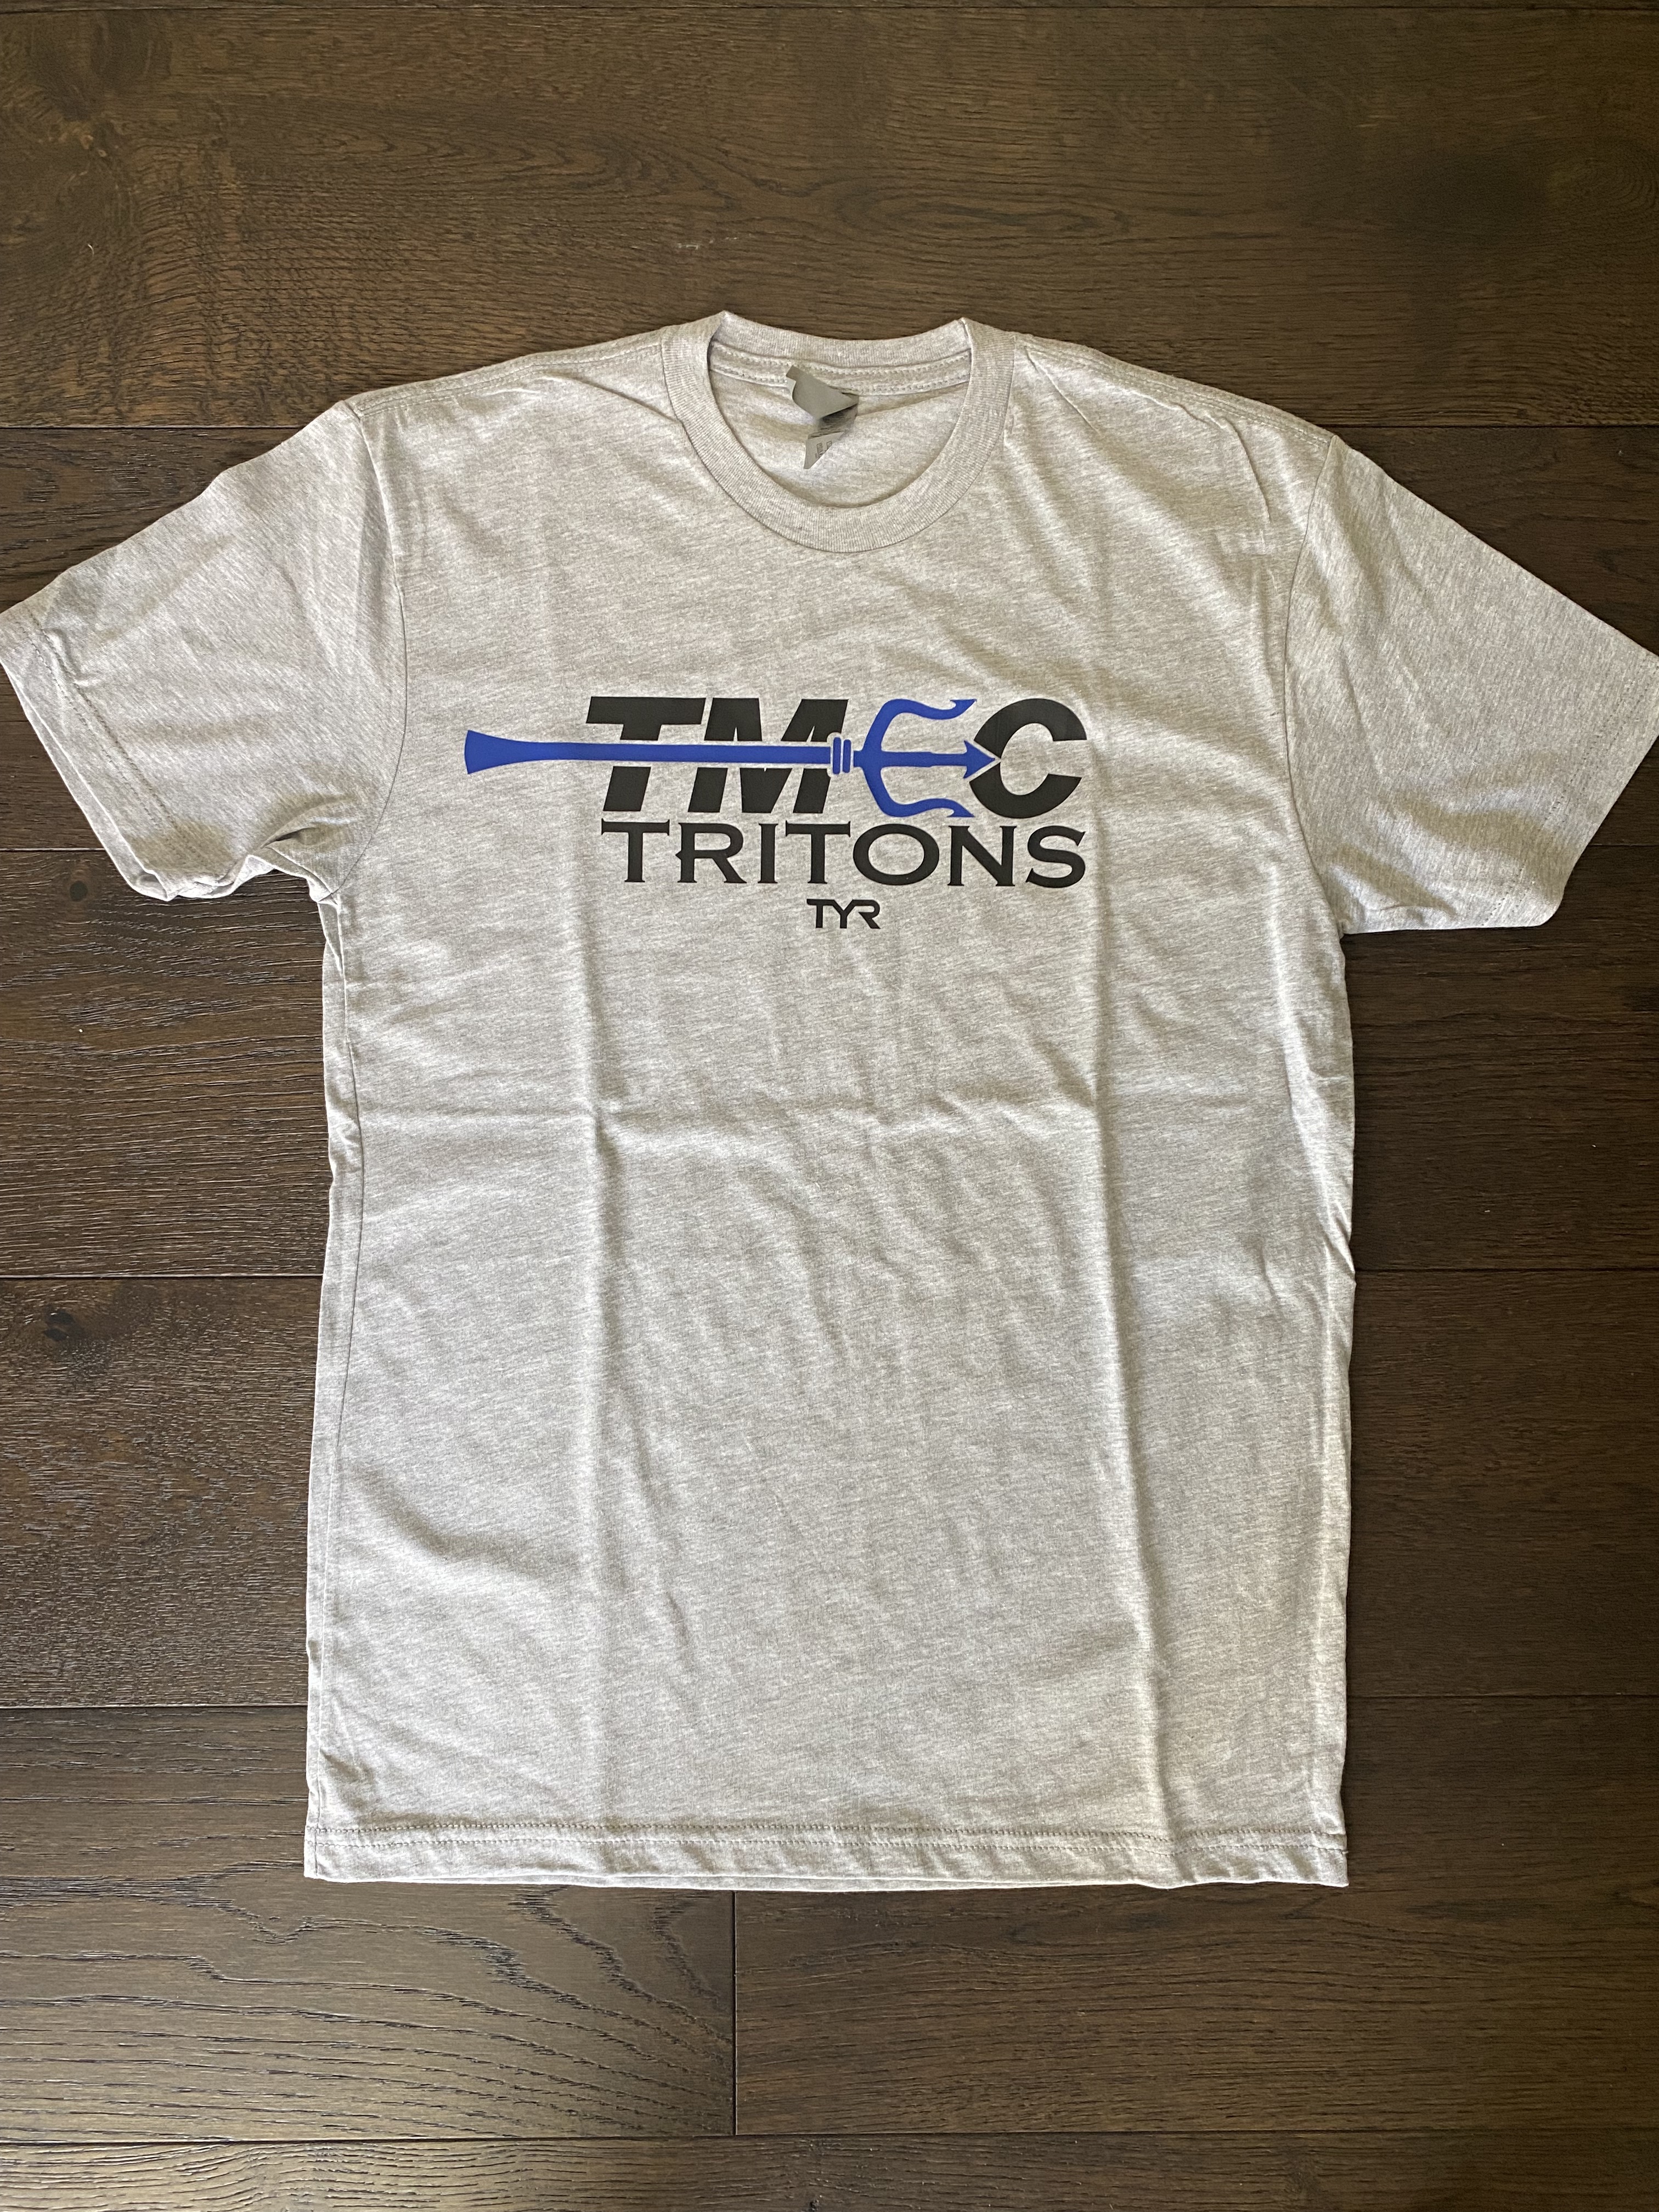 NEXT LEVEL TMEC T-shirt – Gray